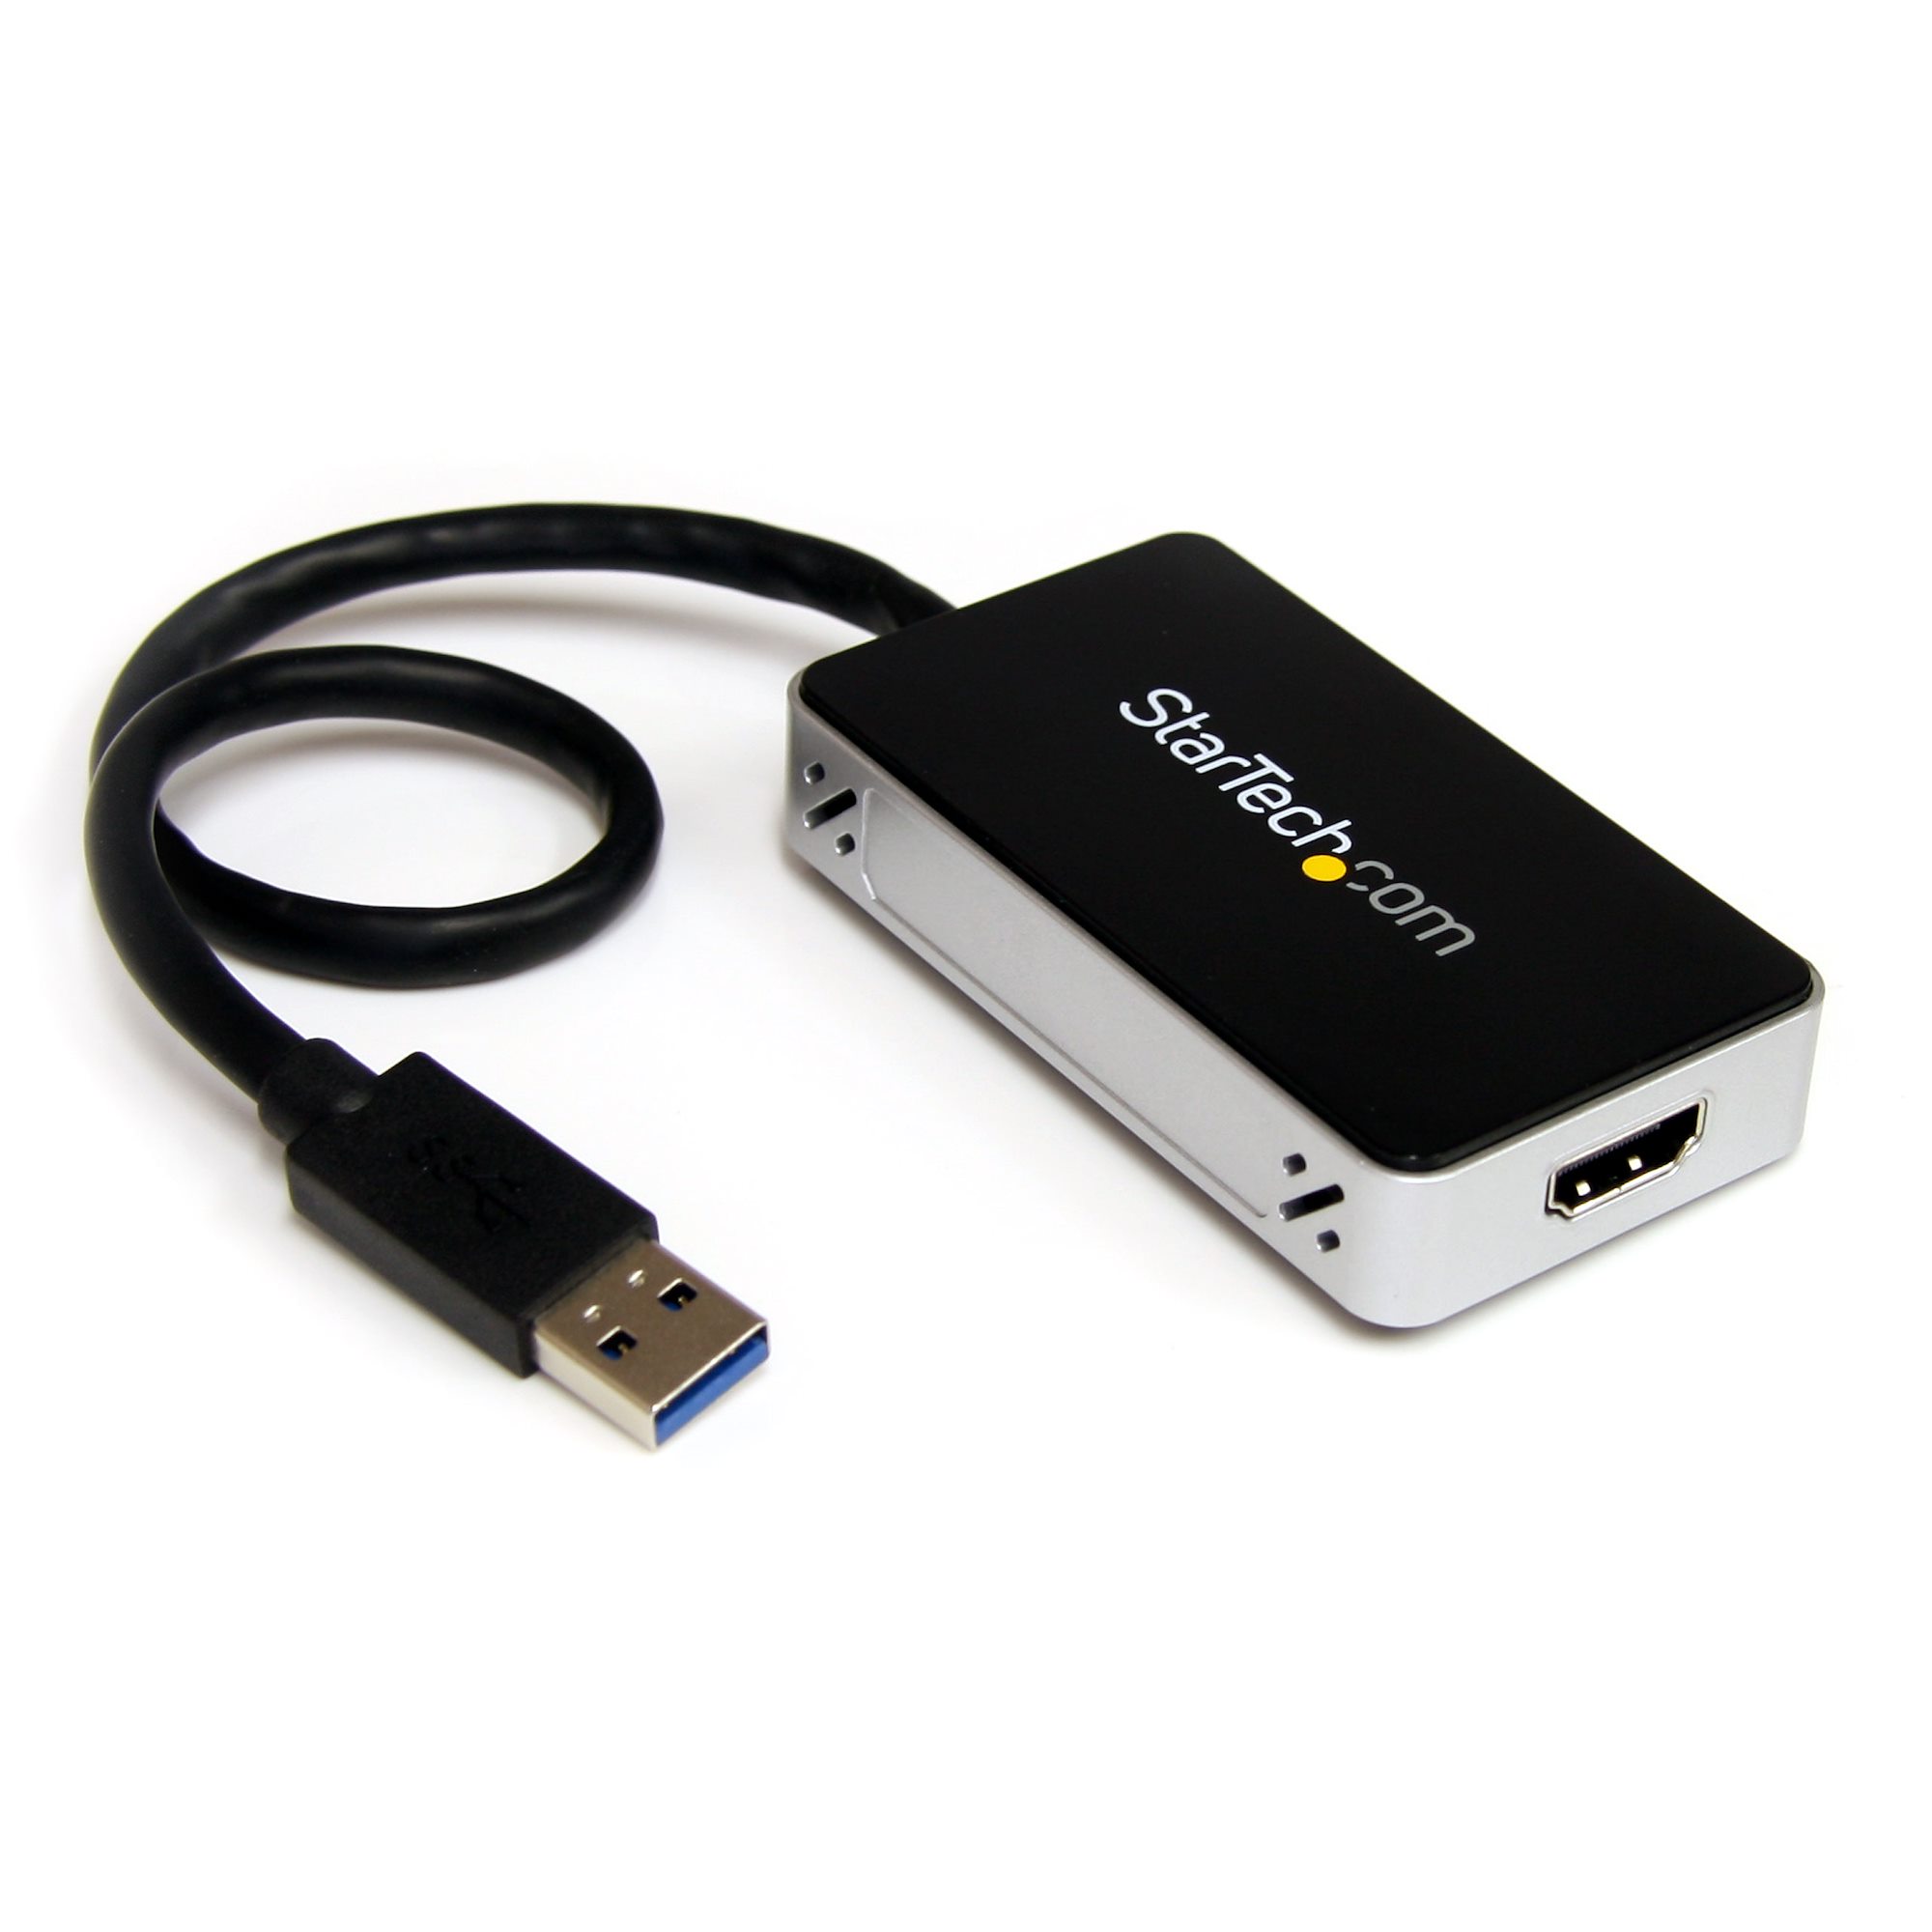 USB 3 to HDMI / DVI External Video Card - USB Video Adapters